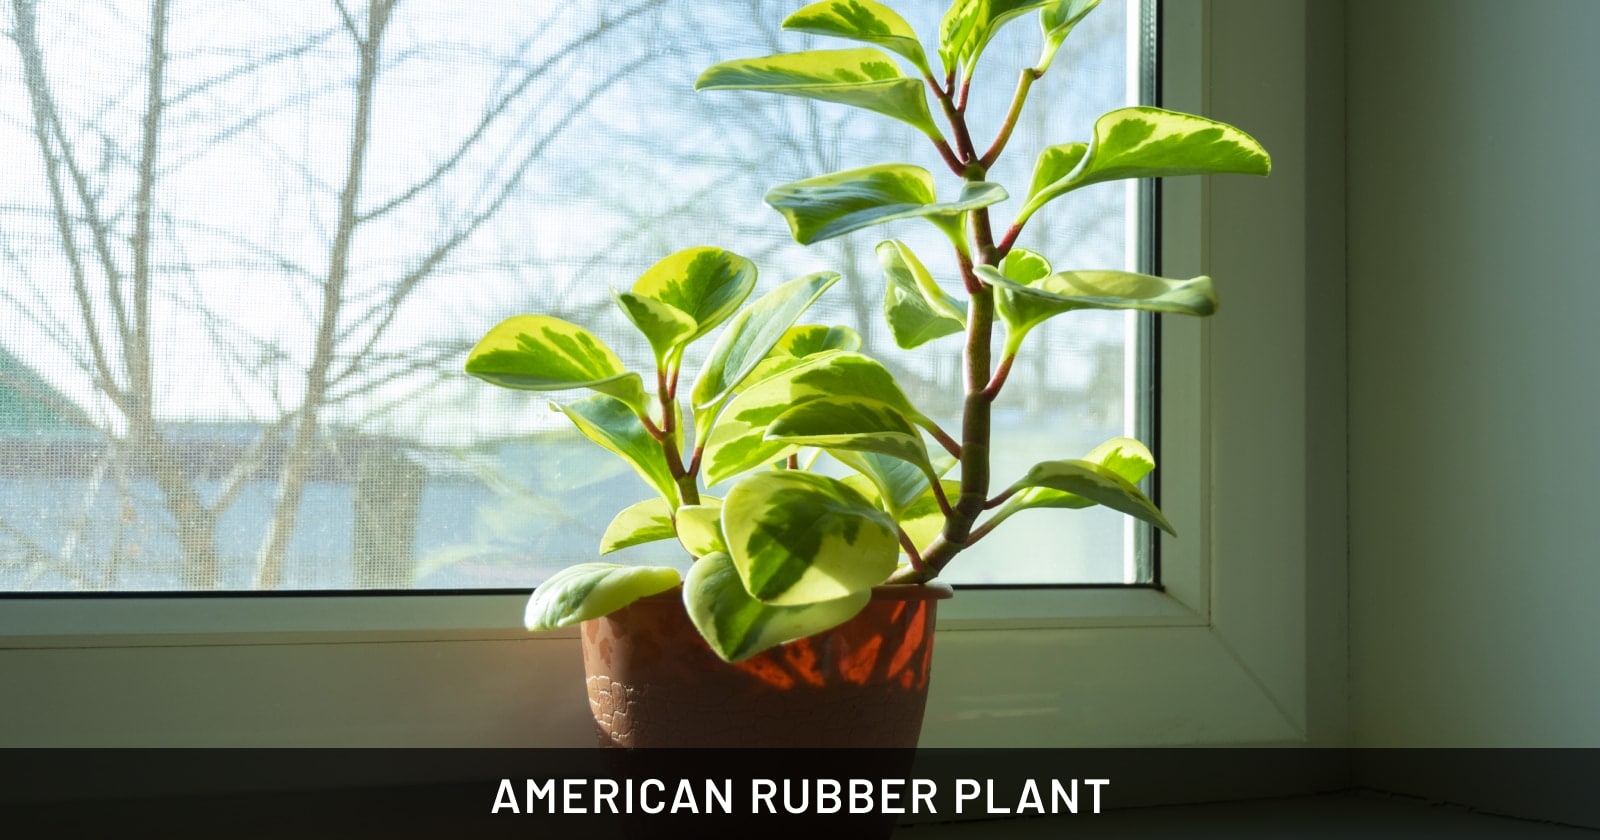 American rubber plant